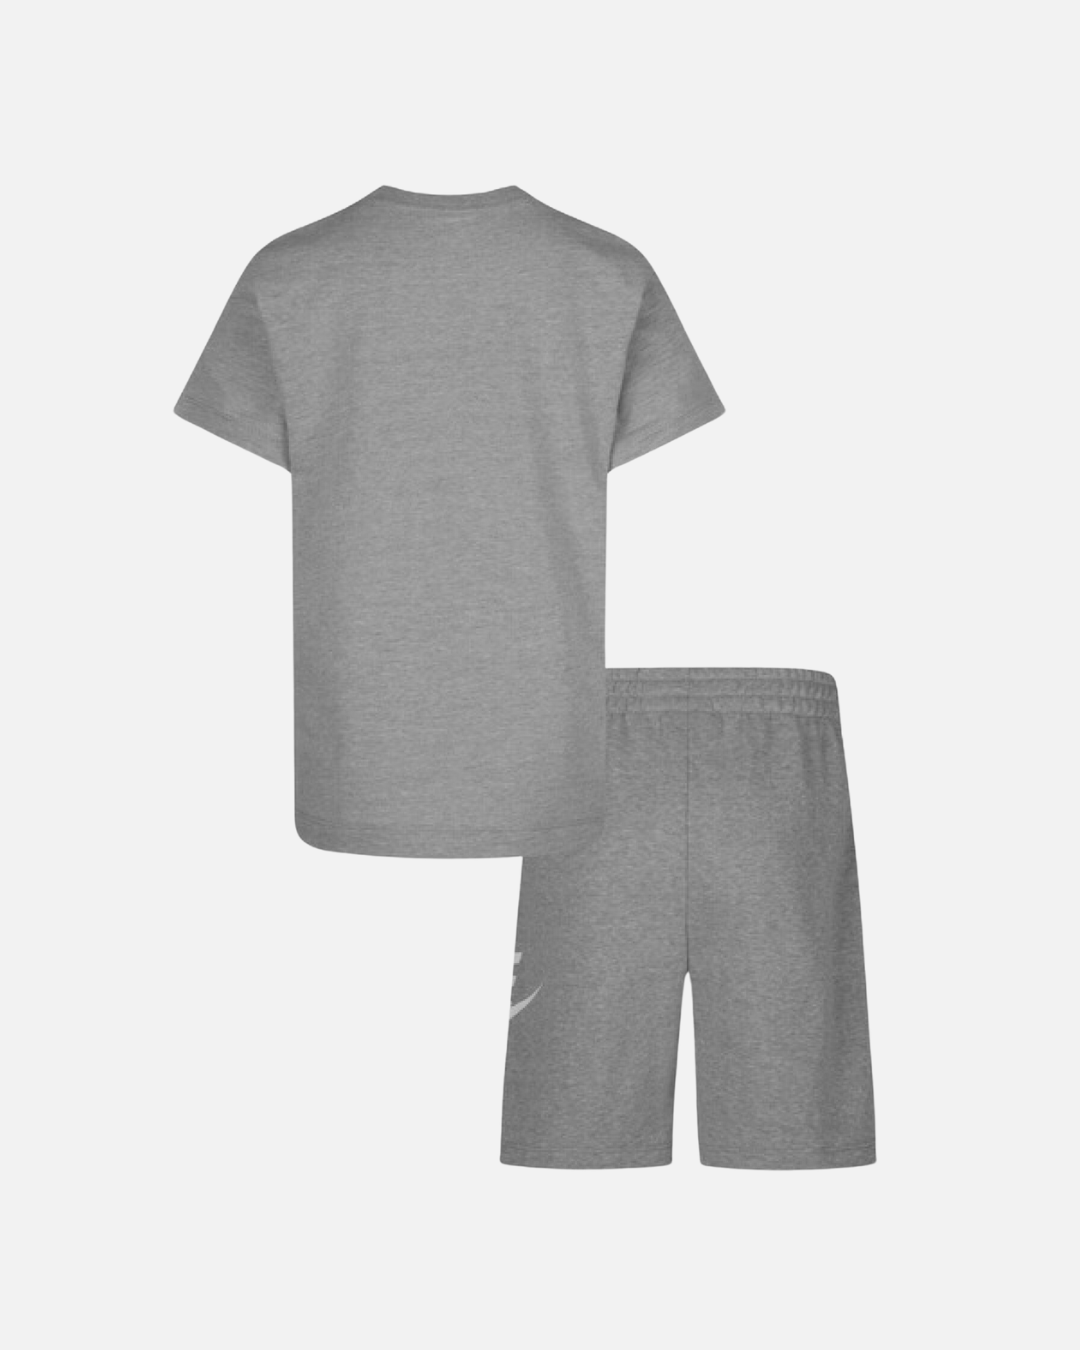 Nike Baby-T-Shirt/Shorts-Set – Grau